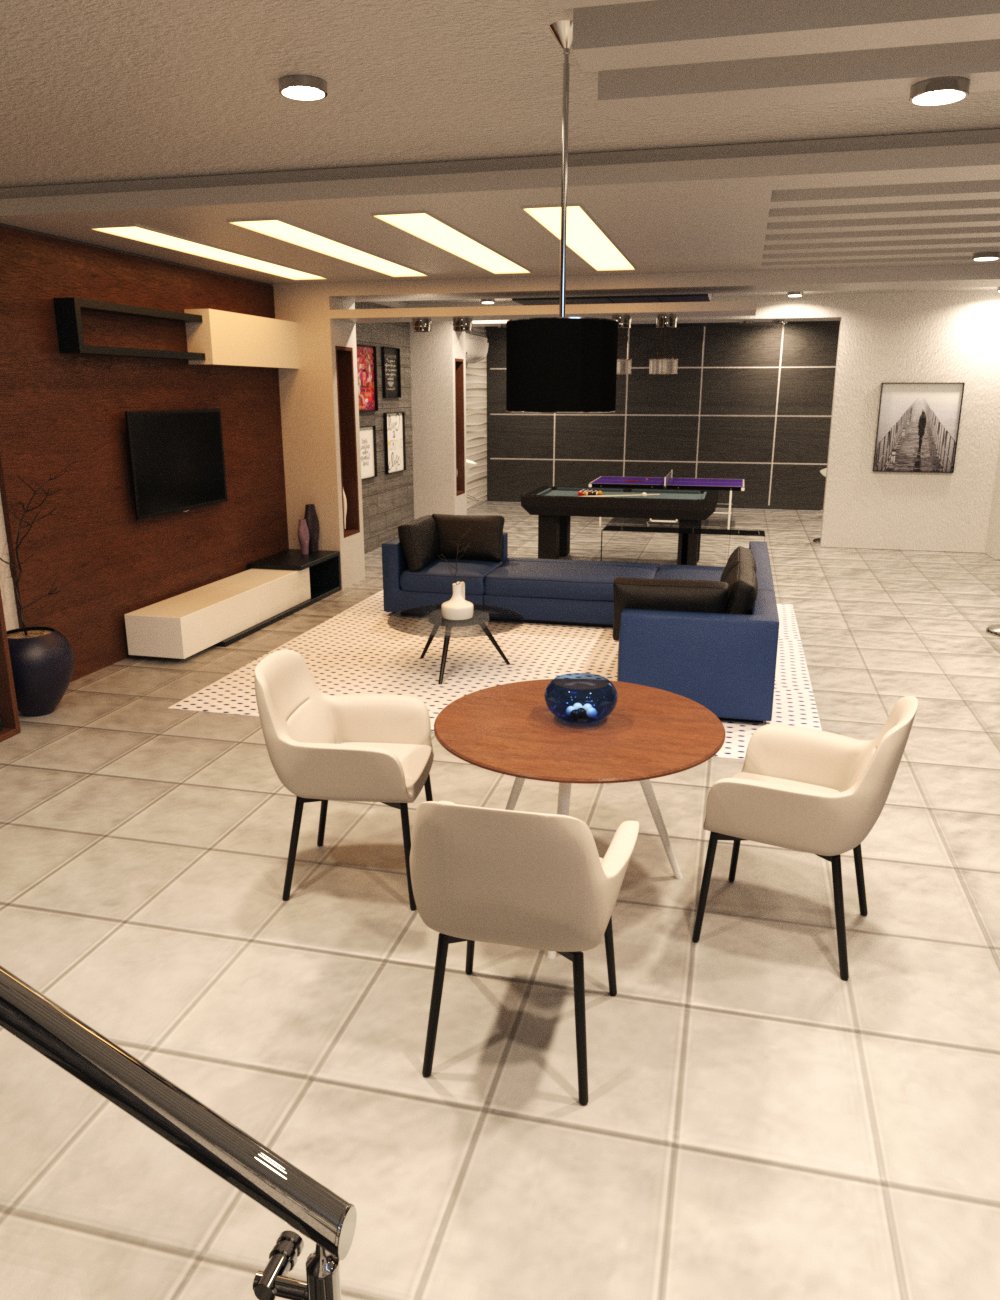 Basement Entertainment Room by: Tesla3dCorp, 3D Models by Daz 3D